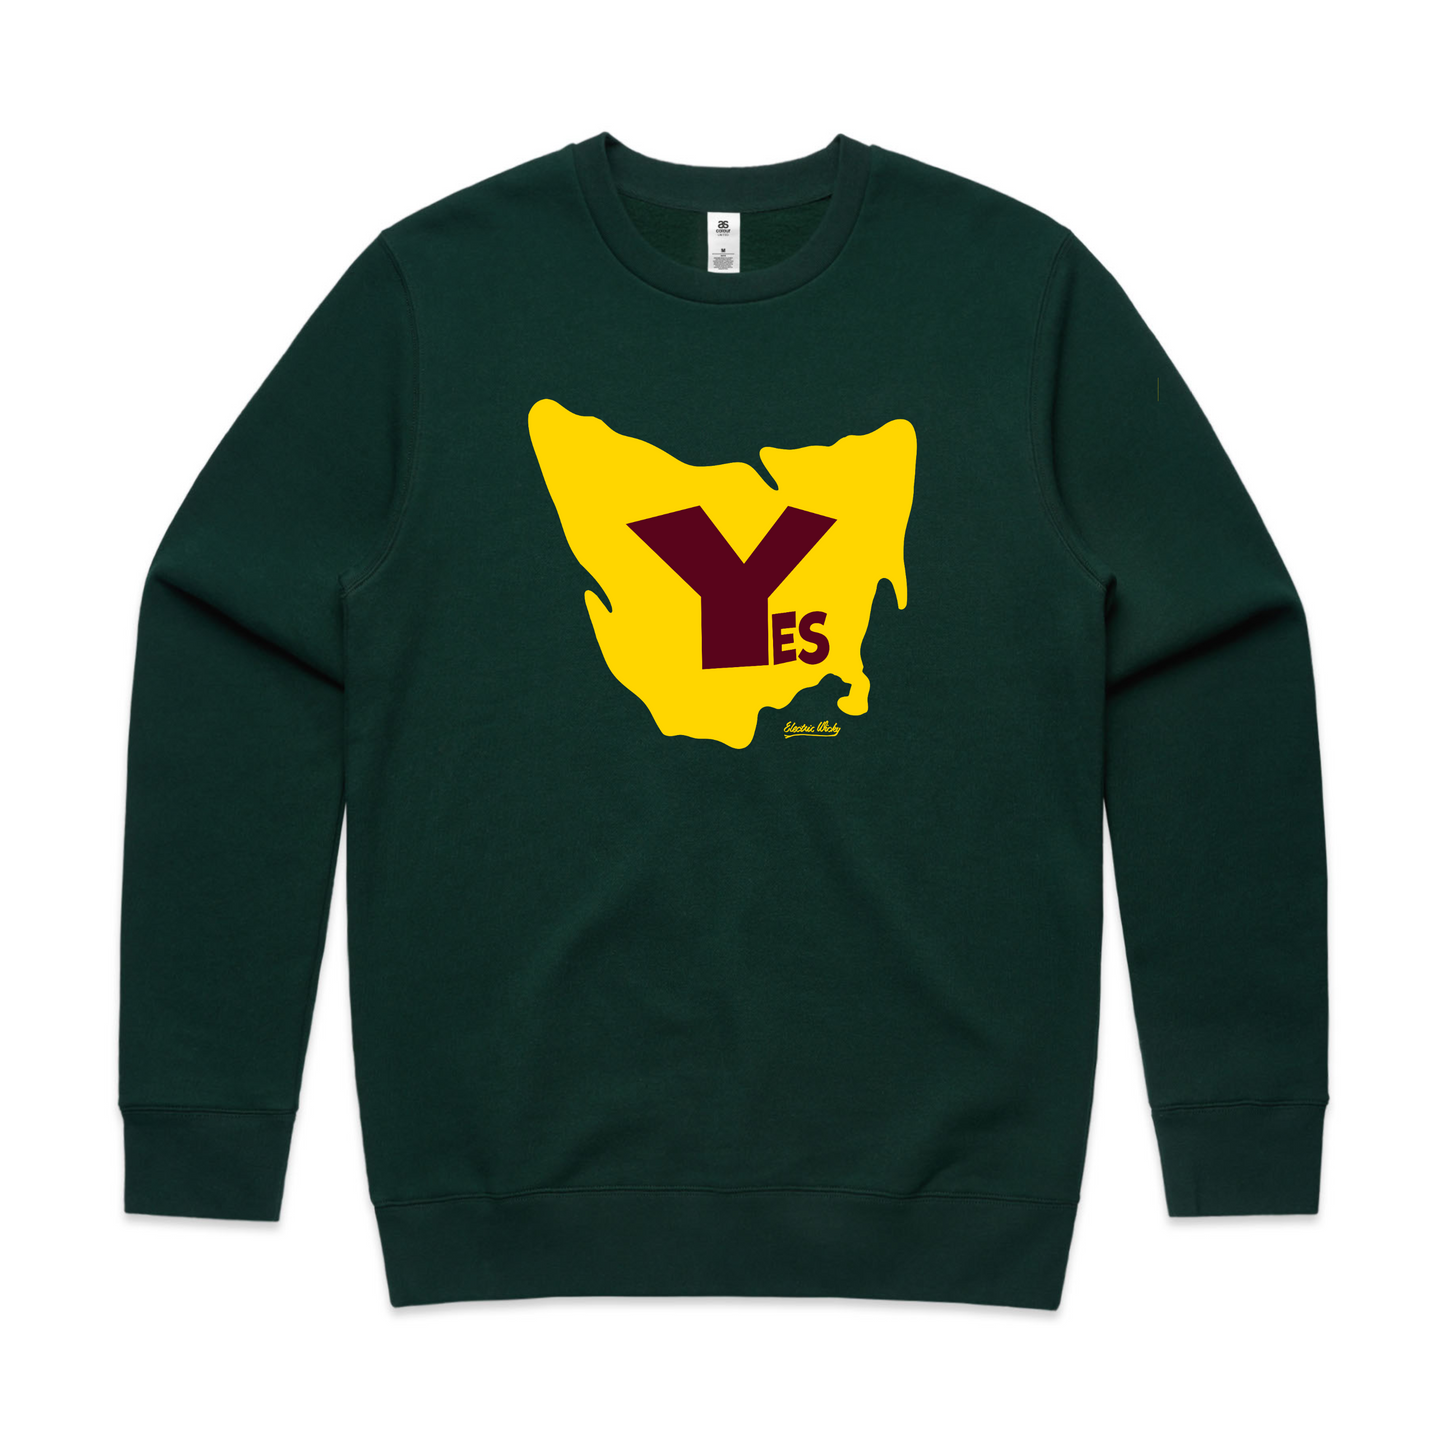 YES Tasmania Sweater